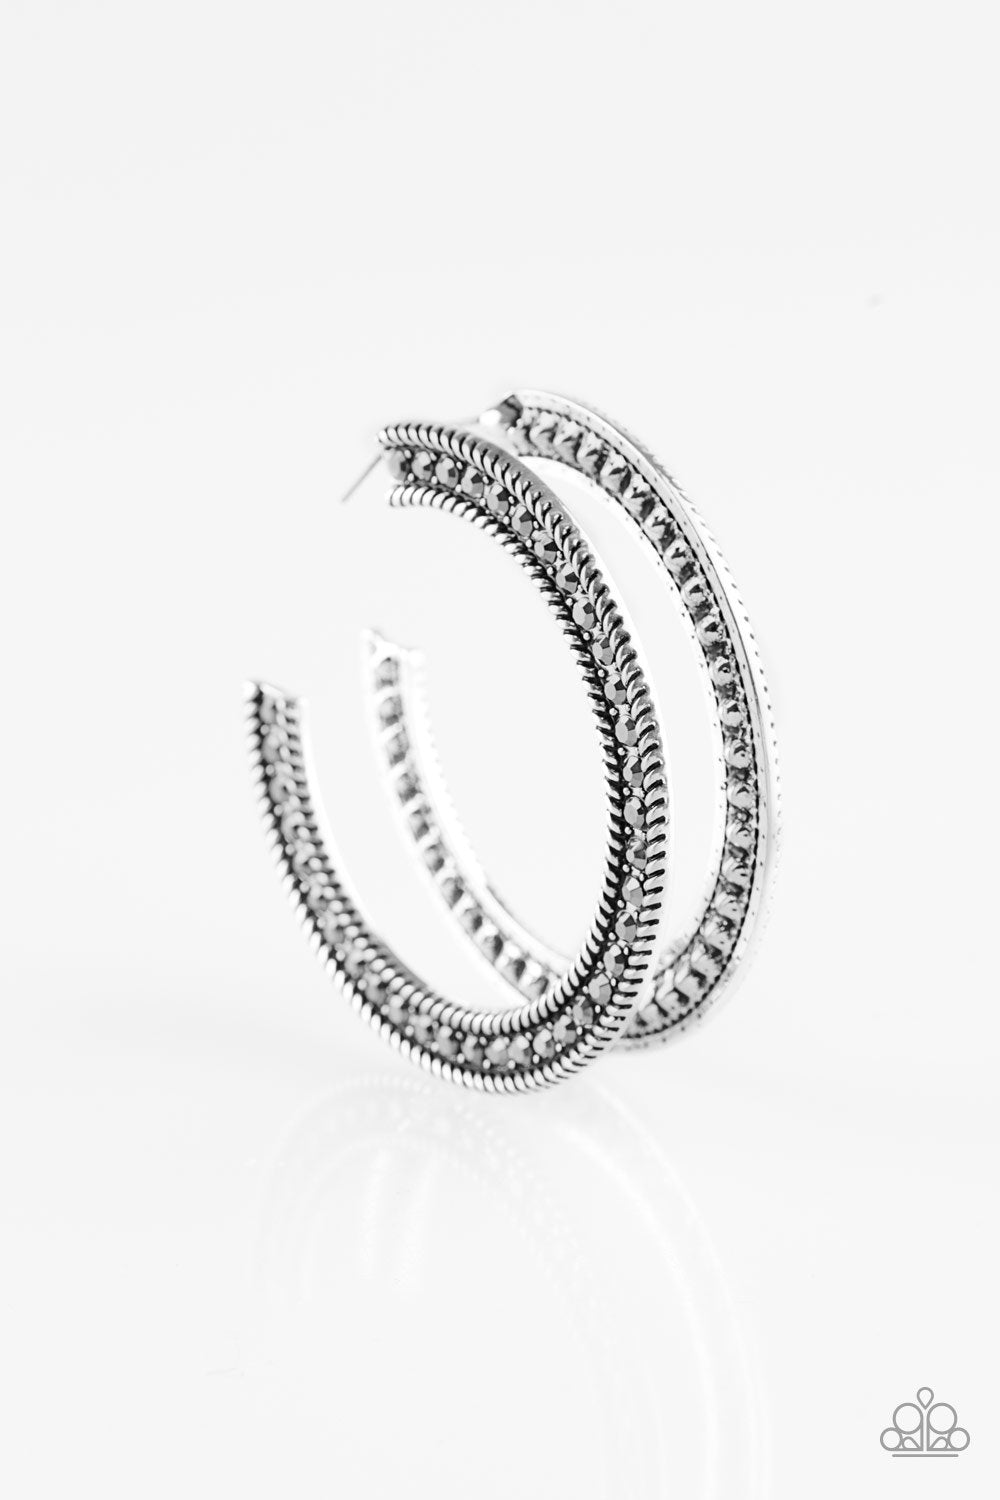 HAUTE Mama Silver and Hematite Rhinestone Hoop Earrings - Paparazzi Accessories-CarasShop.com - $5 Jewelry by Cara Jewels